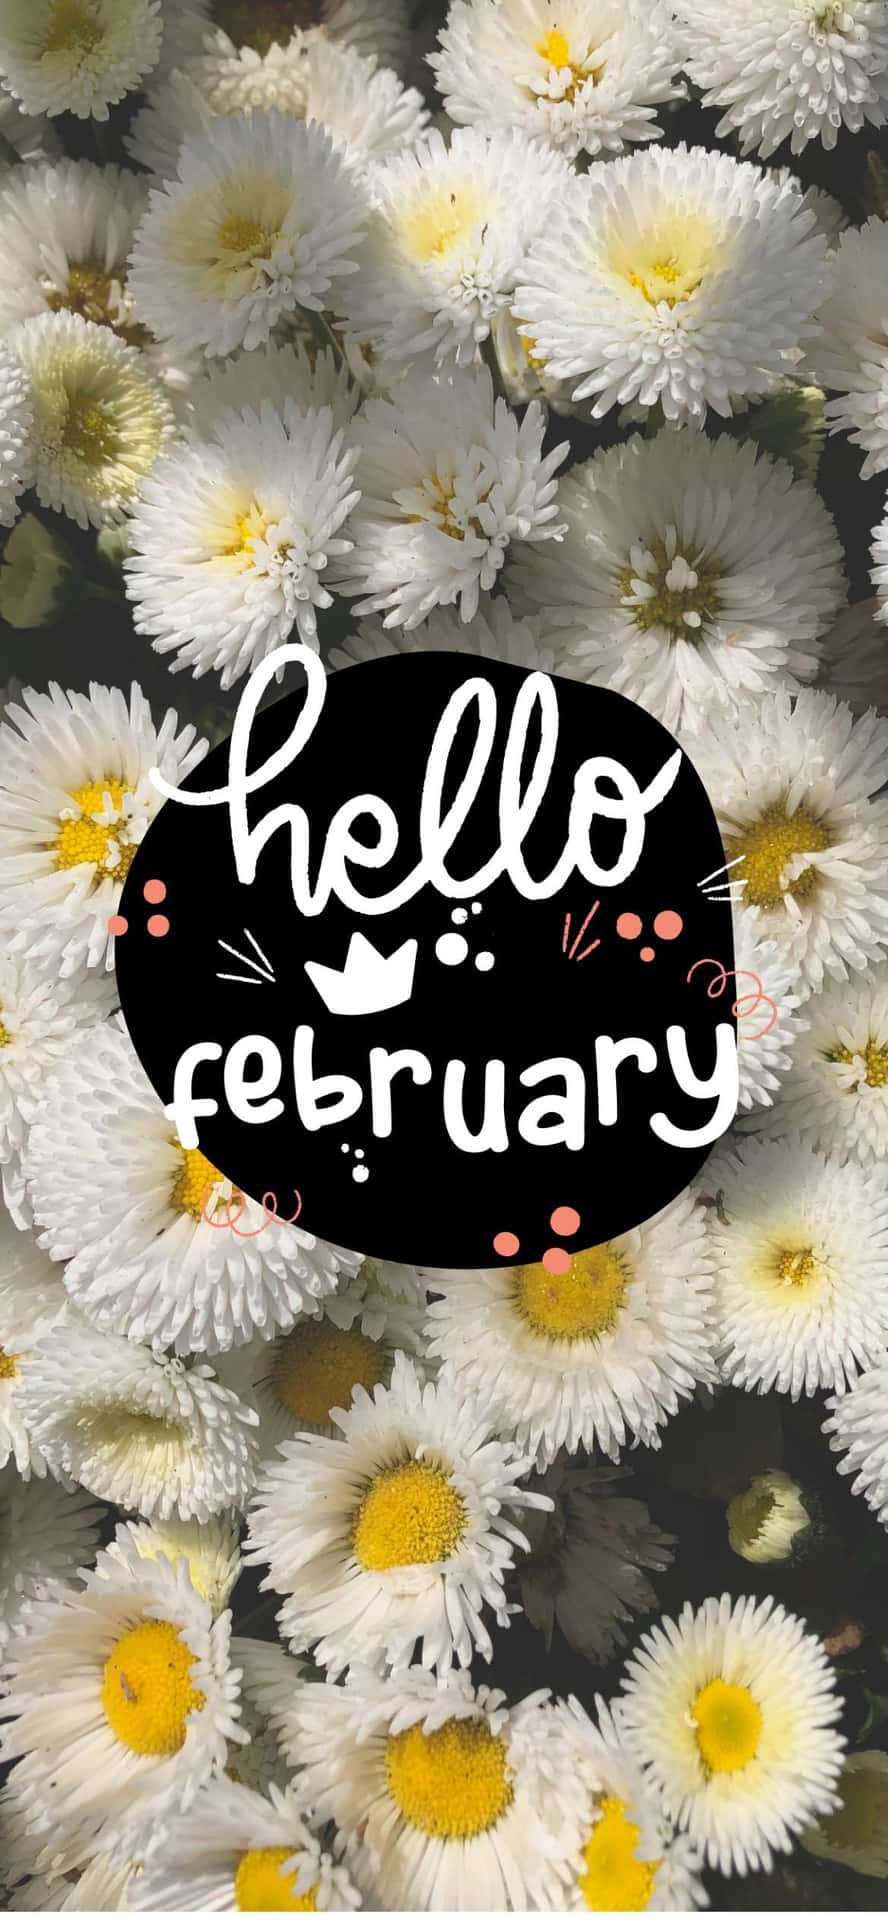 Hello February - Celebrate Spring's Arrival! Wallpaper